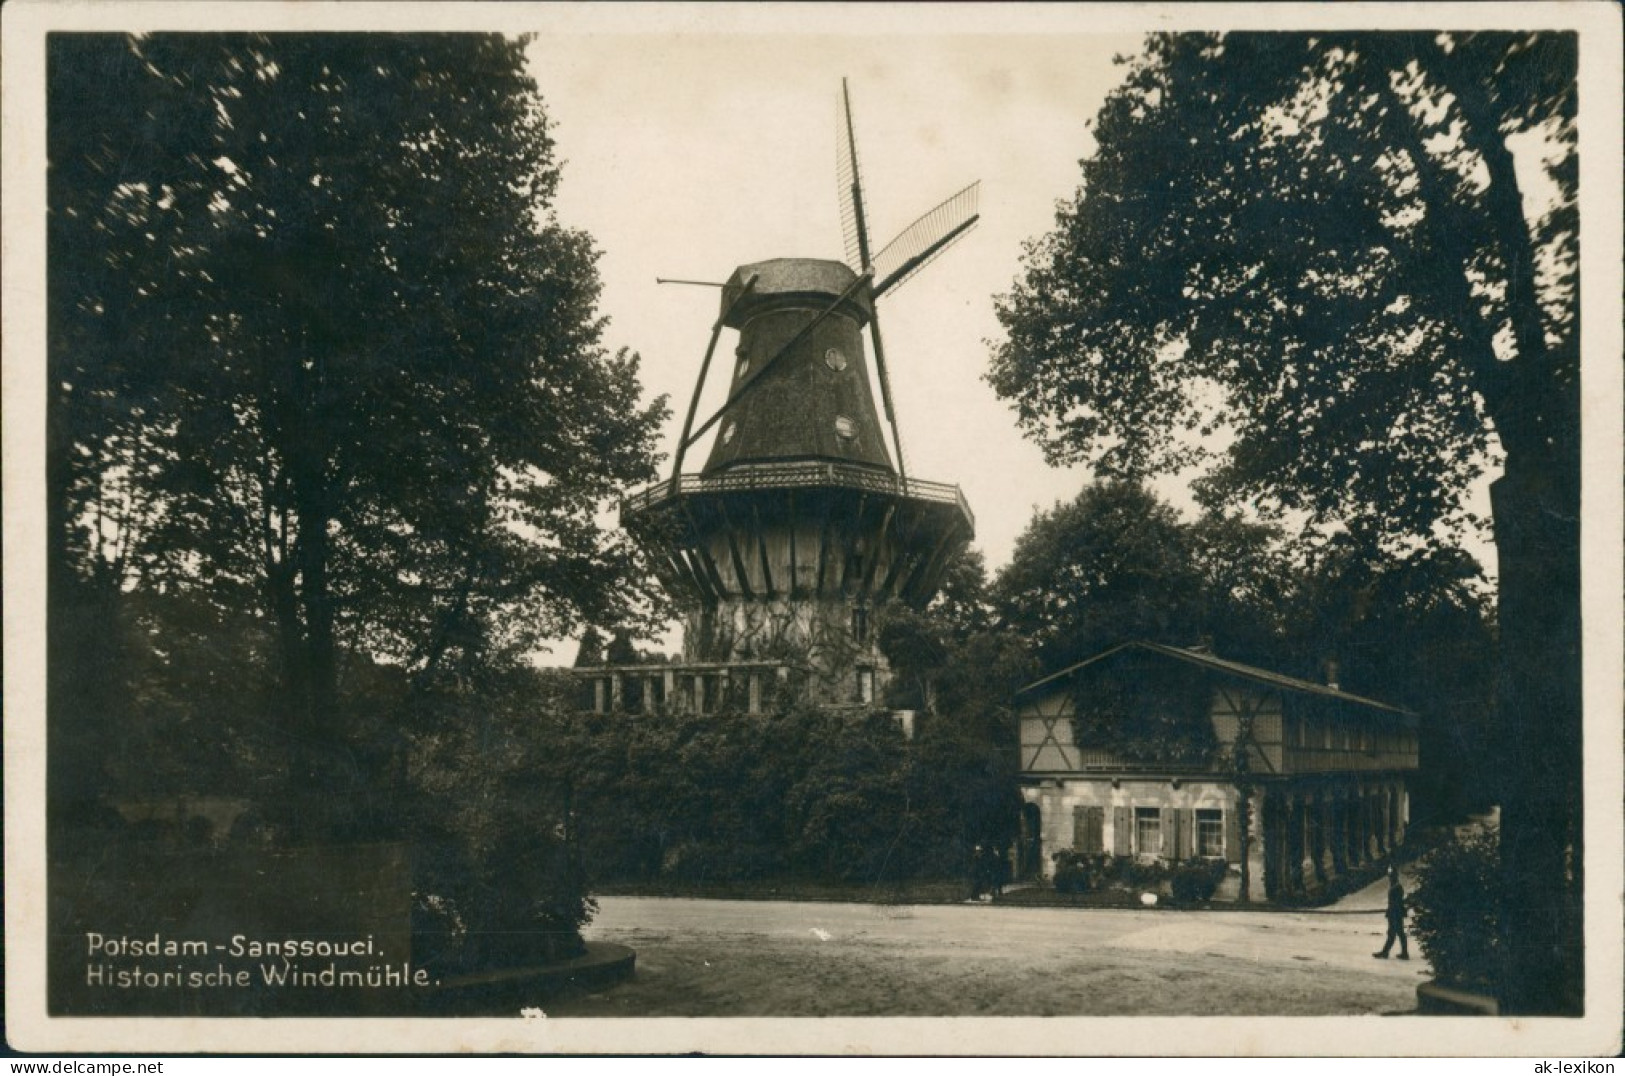 Potsdam Historische Mühle - Sanssouci, Windmühle, Wind Mile 1930 - Potsdam